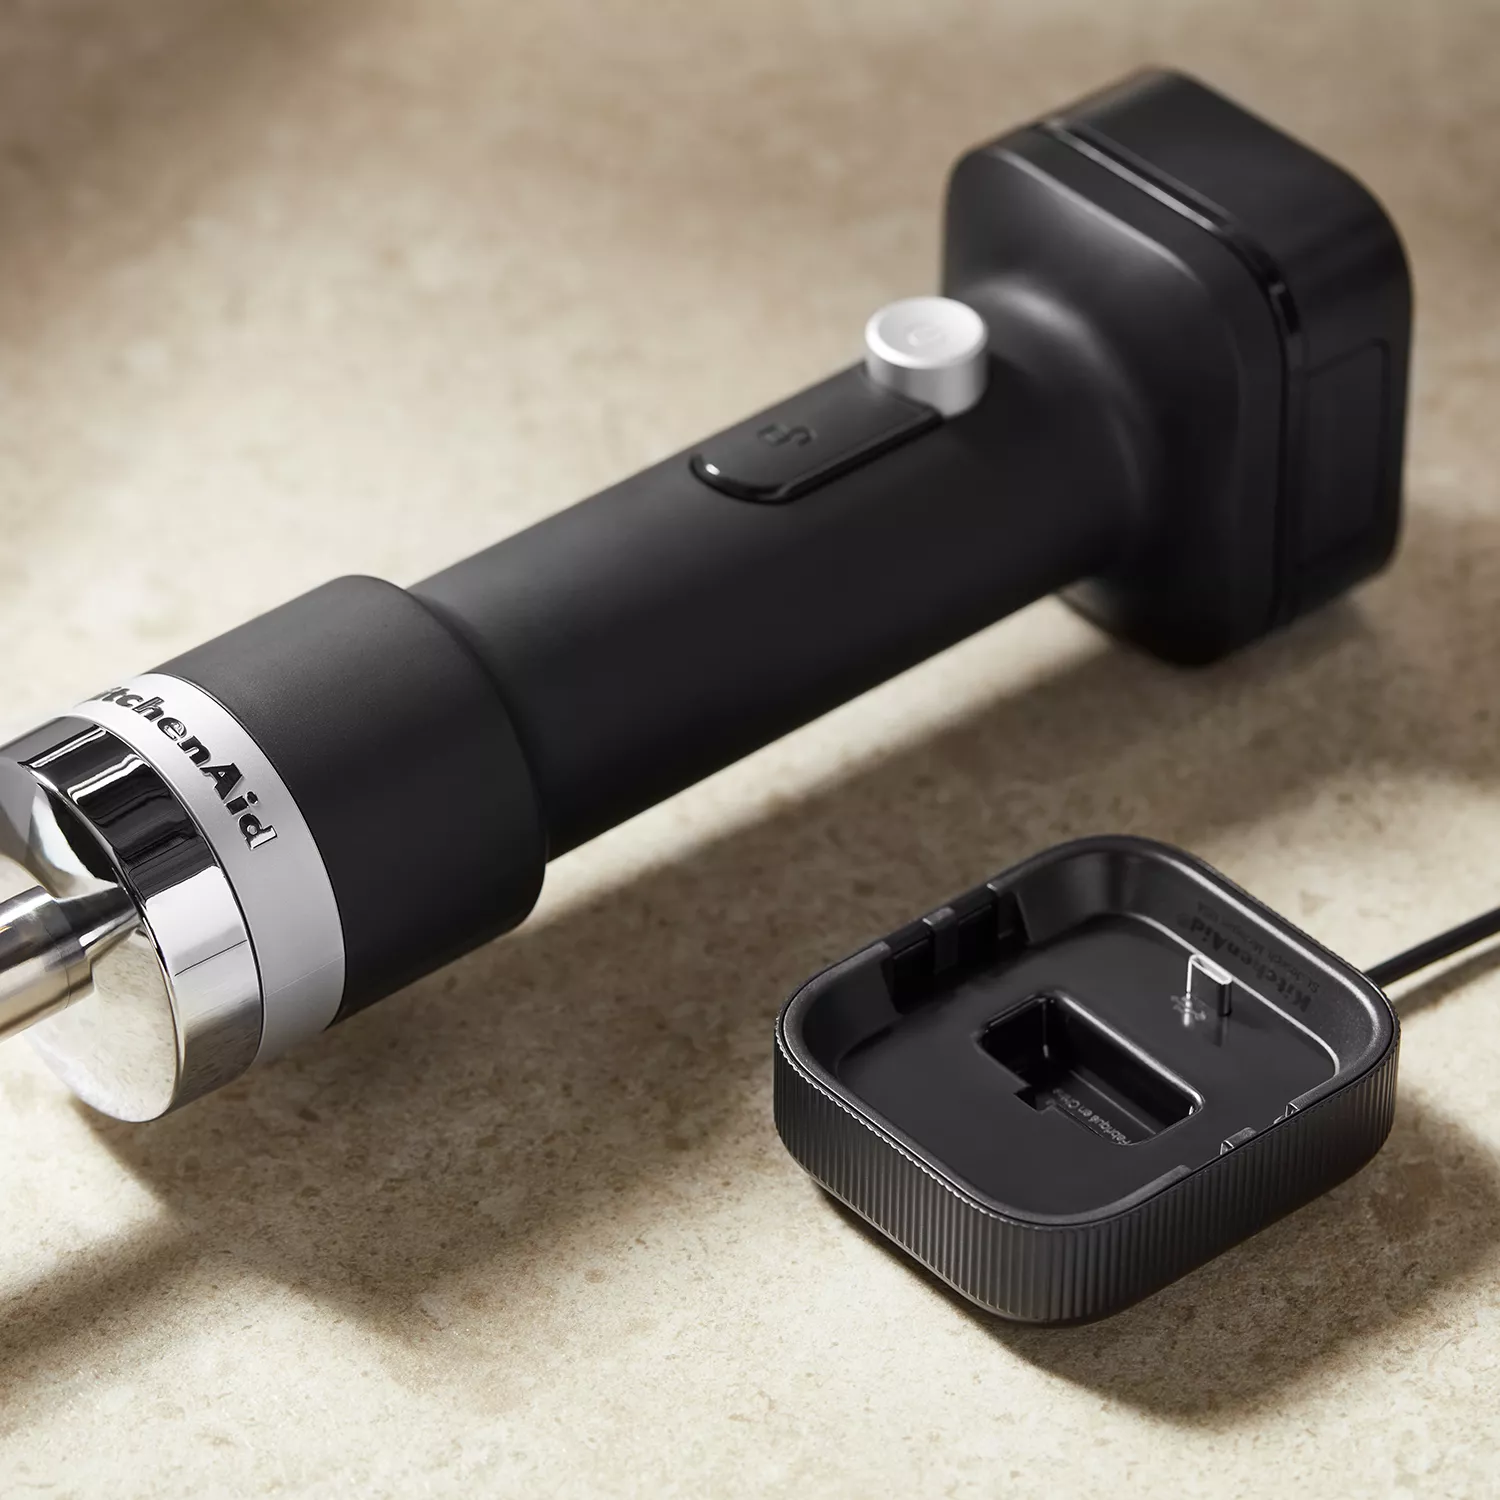 KitchenAid Go™ Cordless USB Charging Dock